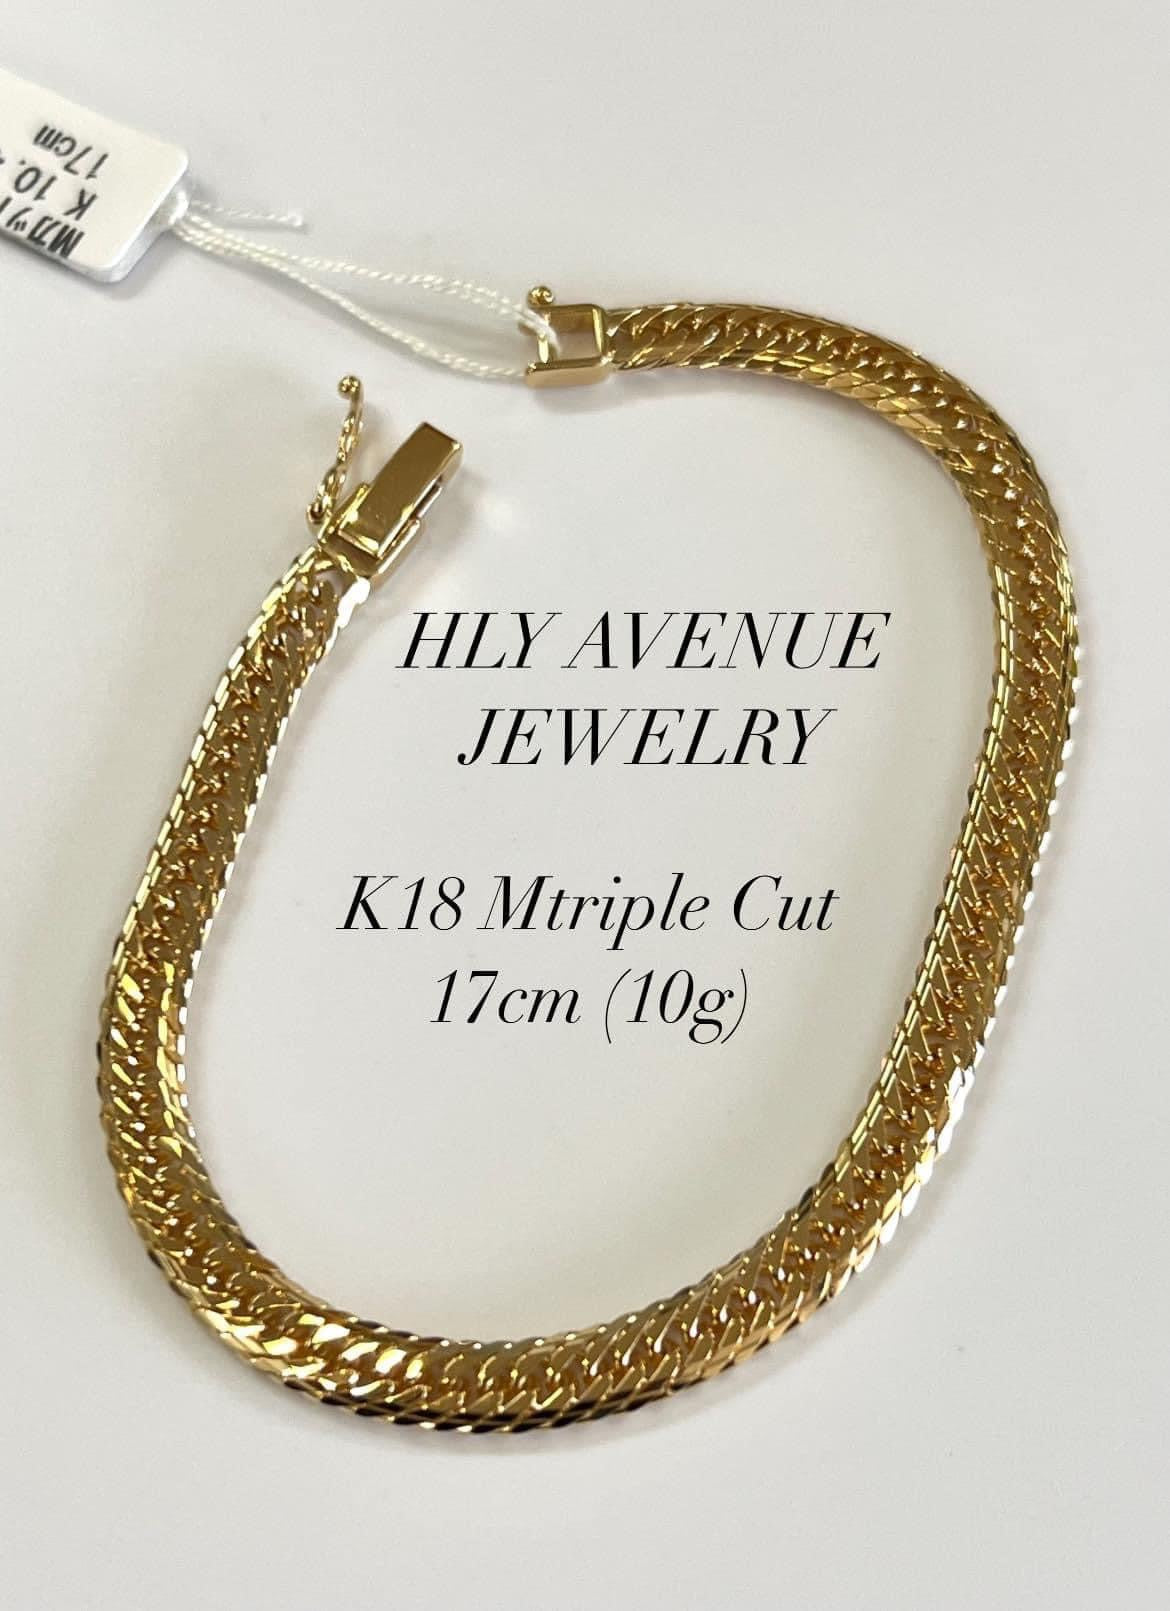 K18 Japan Gold Mcut Kihei 17CM (10g) – HLY Avenue Jewelry